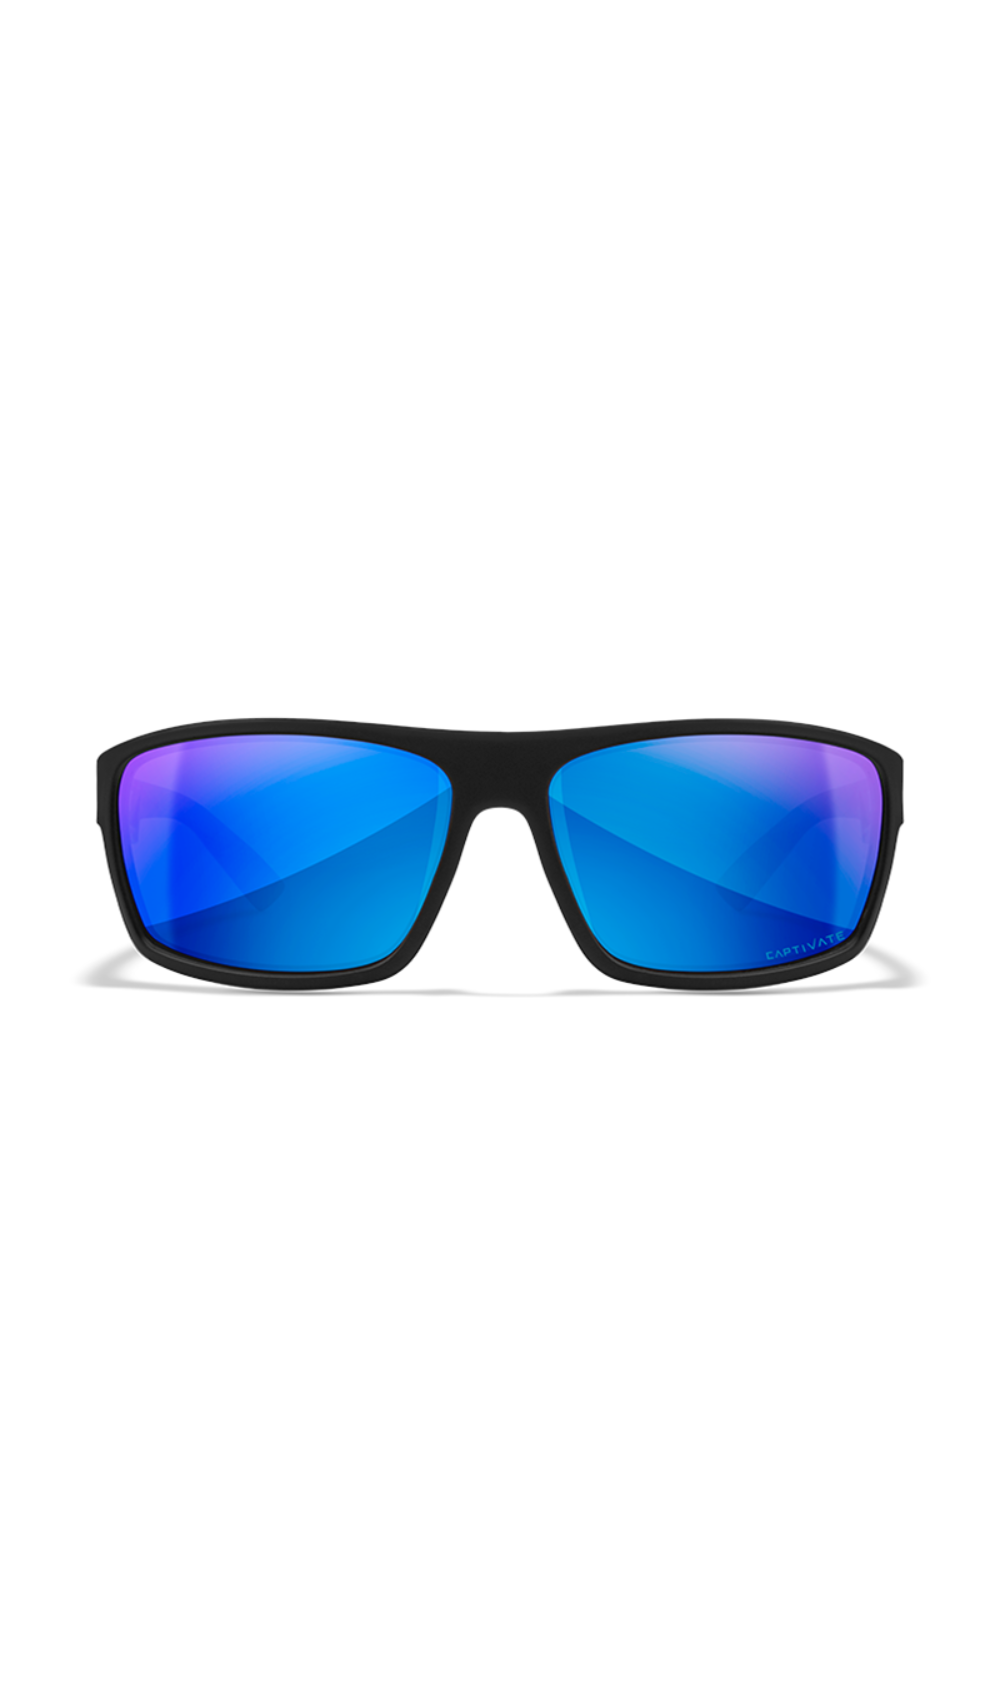 Wileyx Sunglasses Peak Captivate Pol Blue Mirror/Matte Black Frame